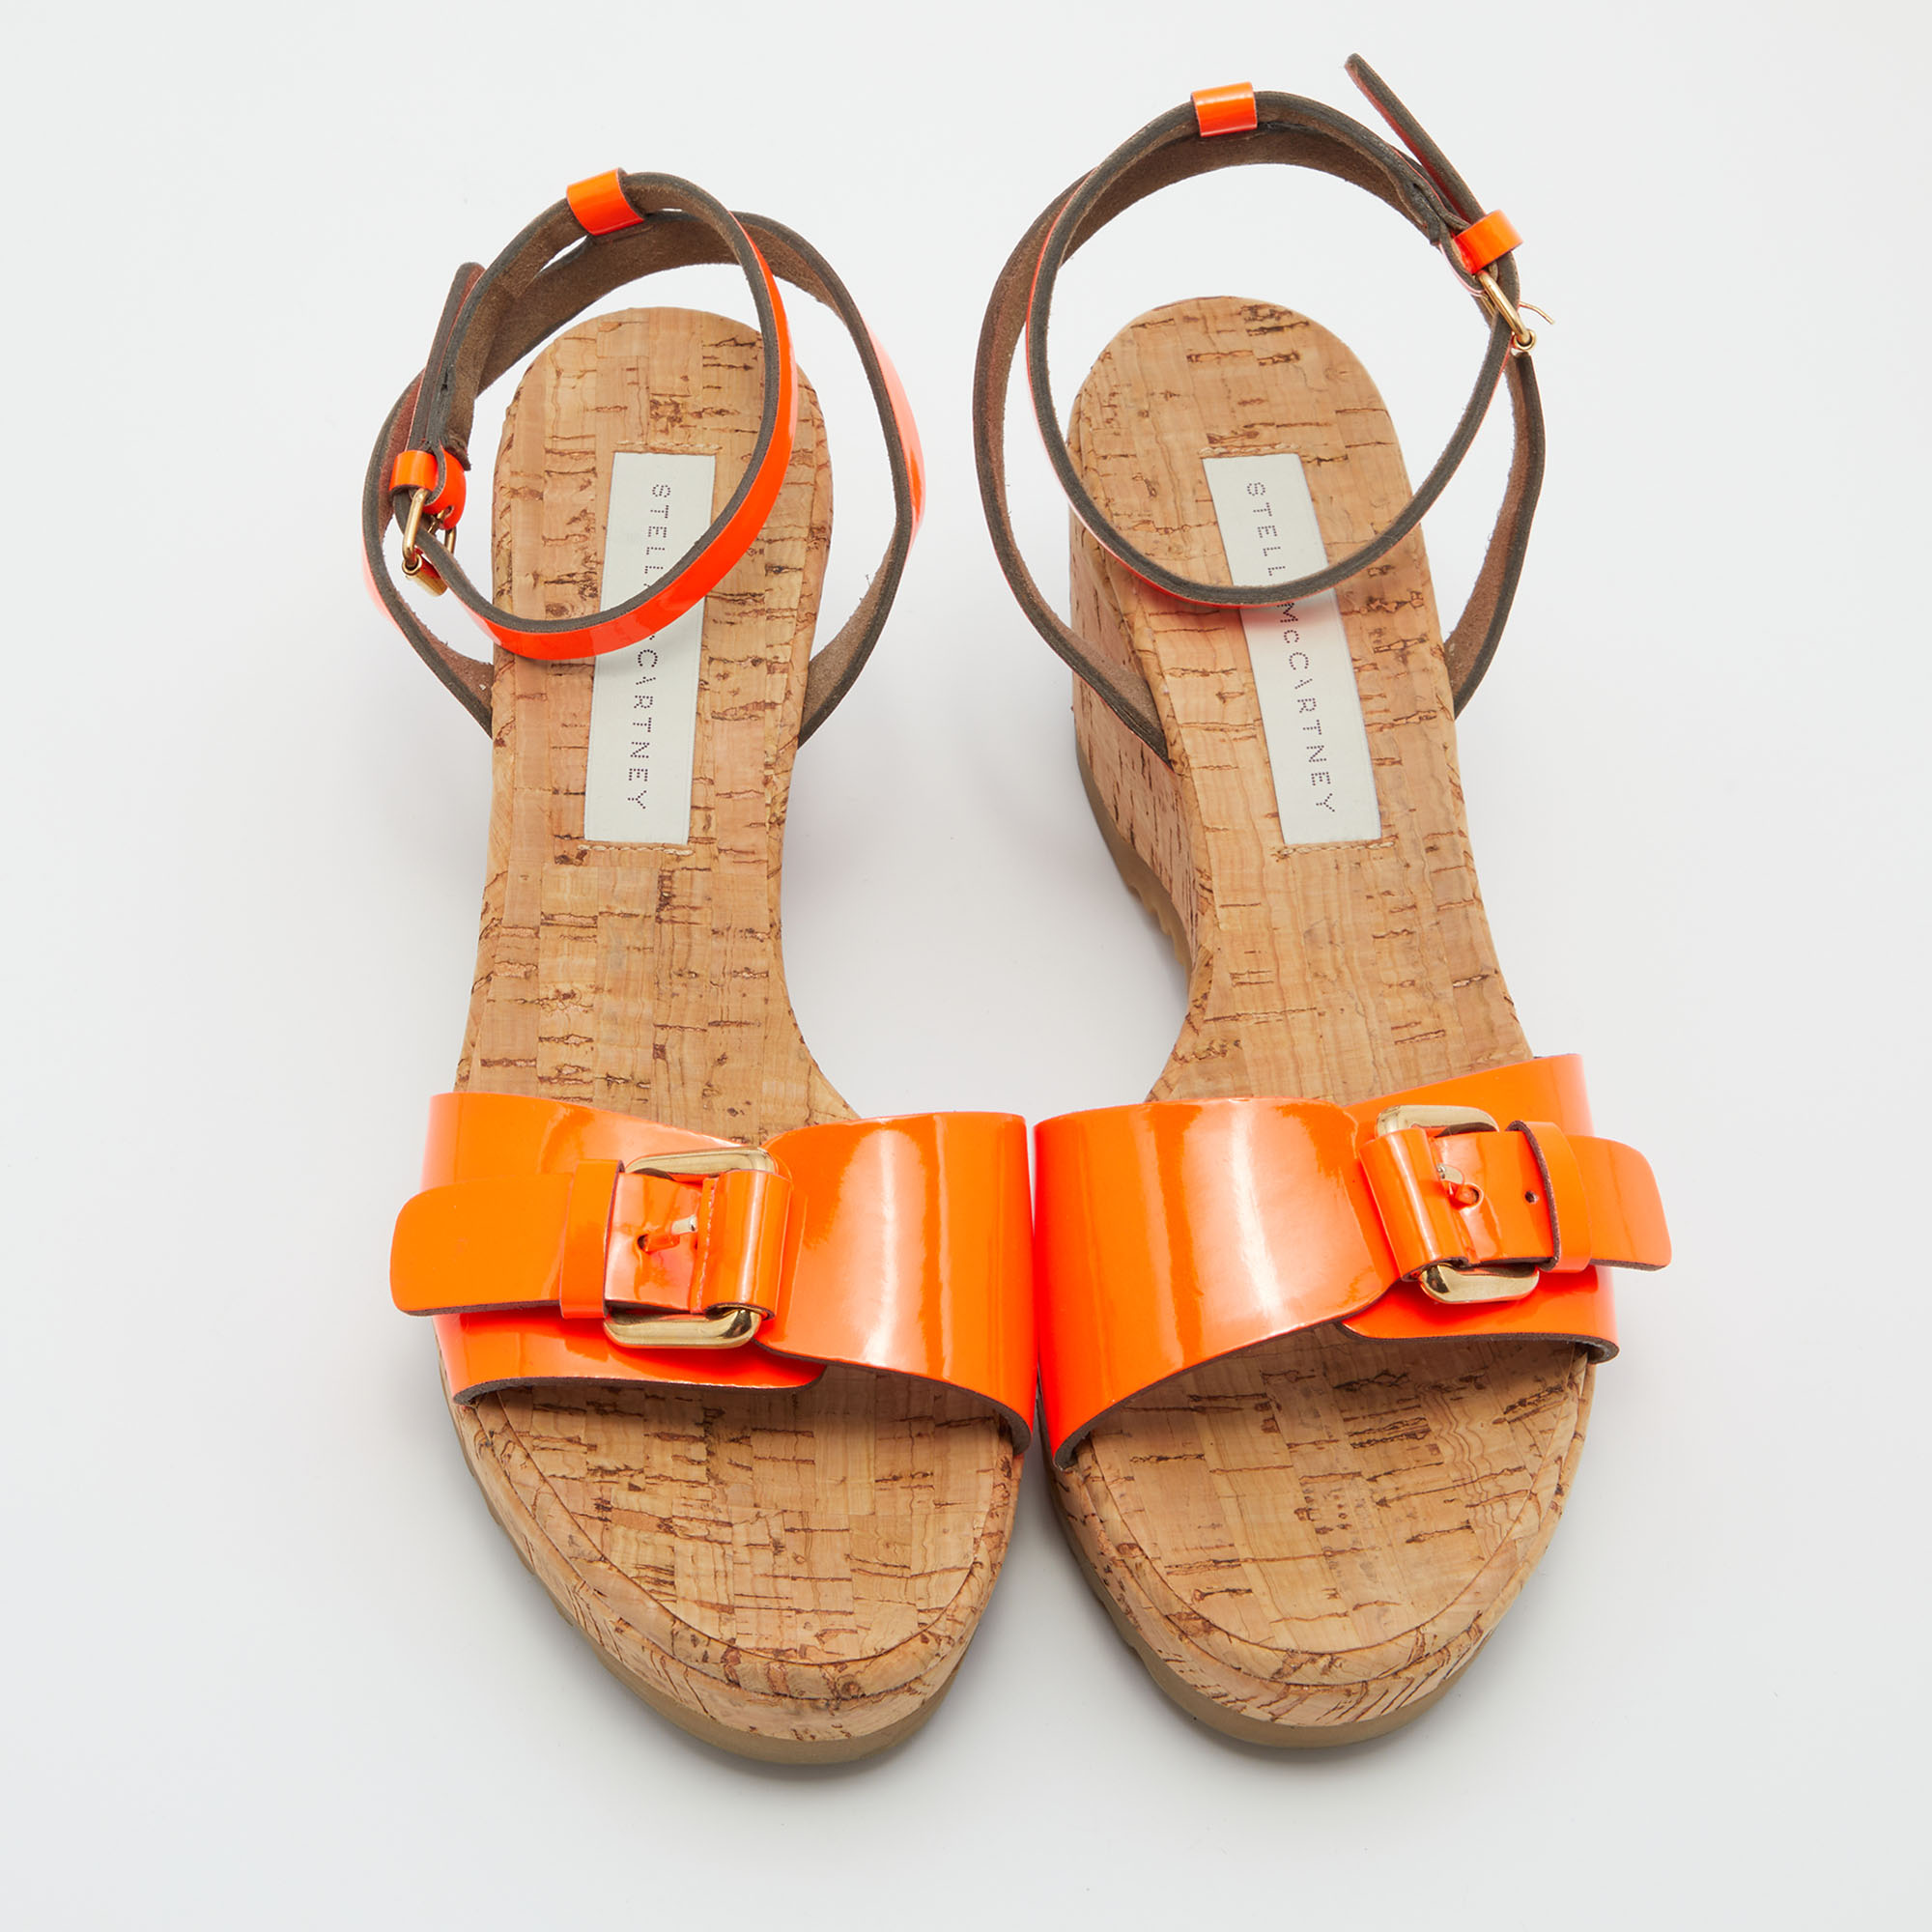 Stella McCartney Neon Orange Faux Patent Leather Cork Platform Wedge Ankle Strap Sandals Size 39